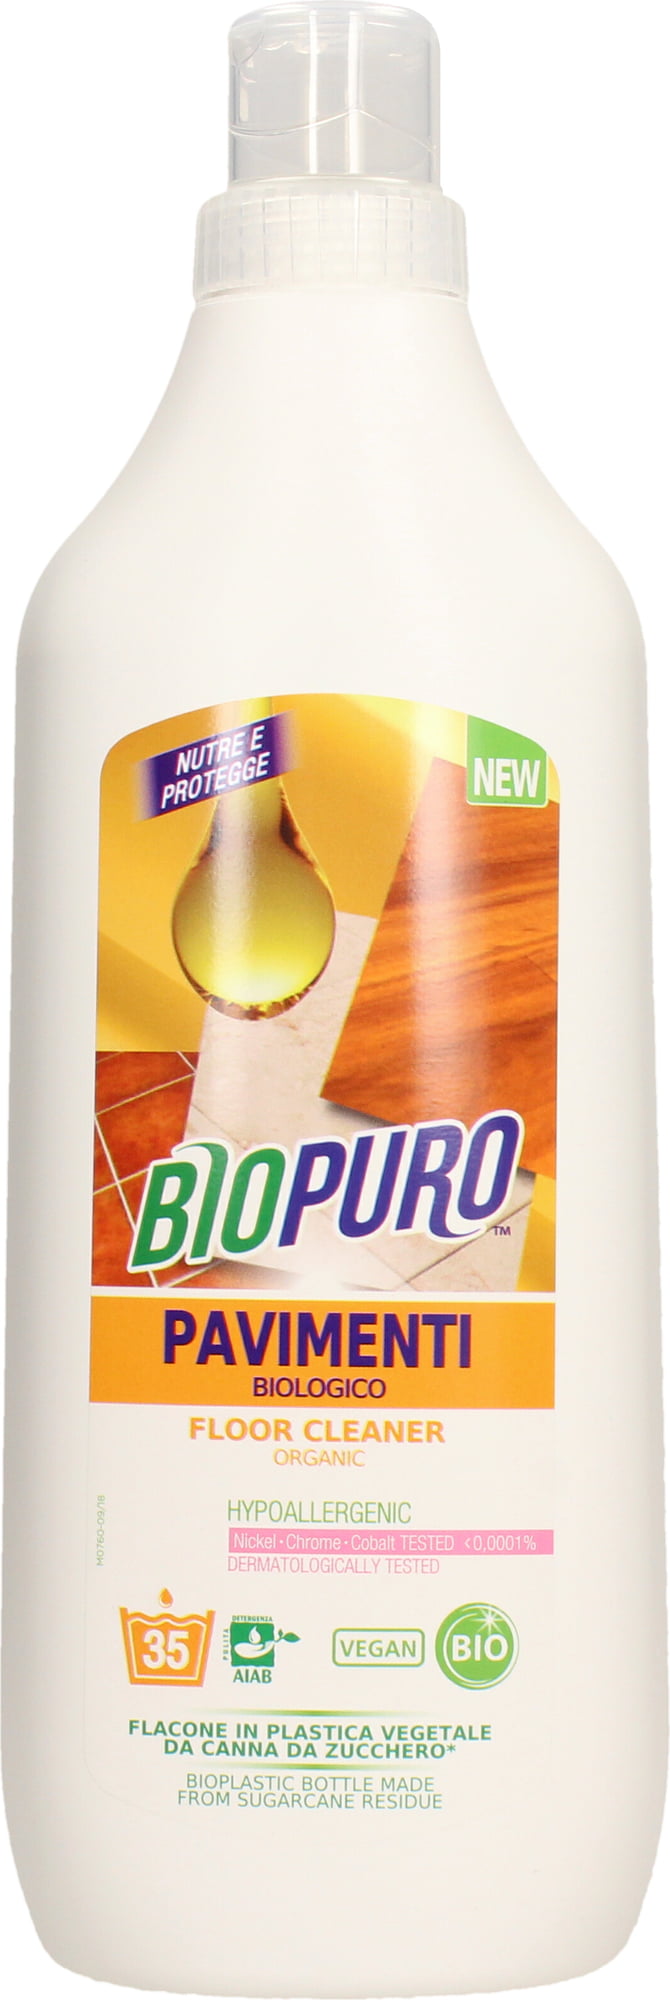 BIOPURO Detergente Bio per Pavimenti, 1 L - Biolindo - Shop online